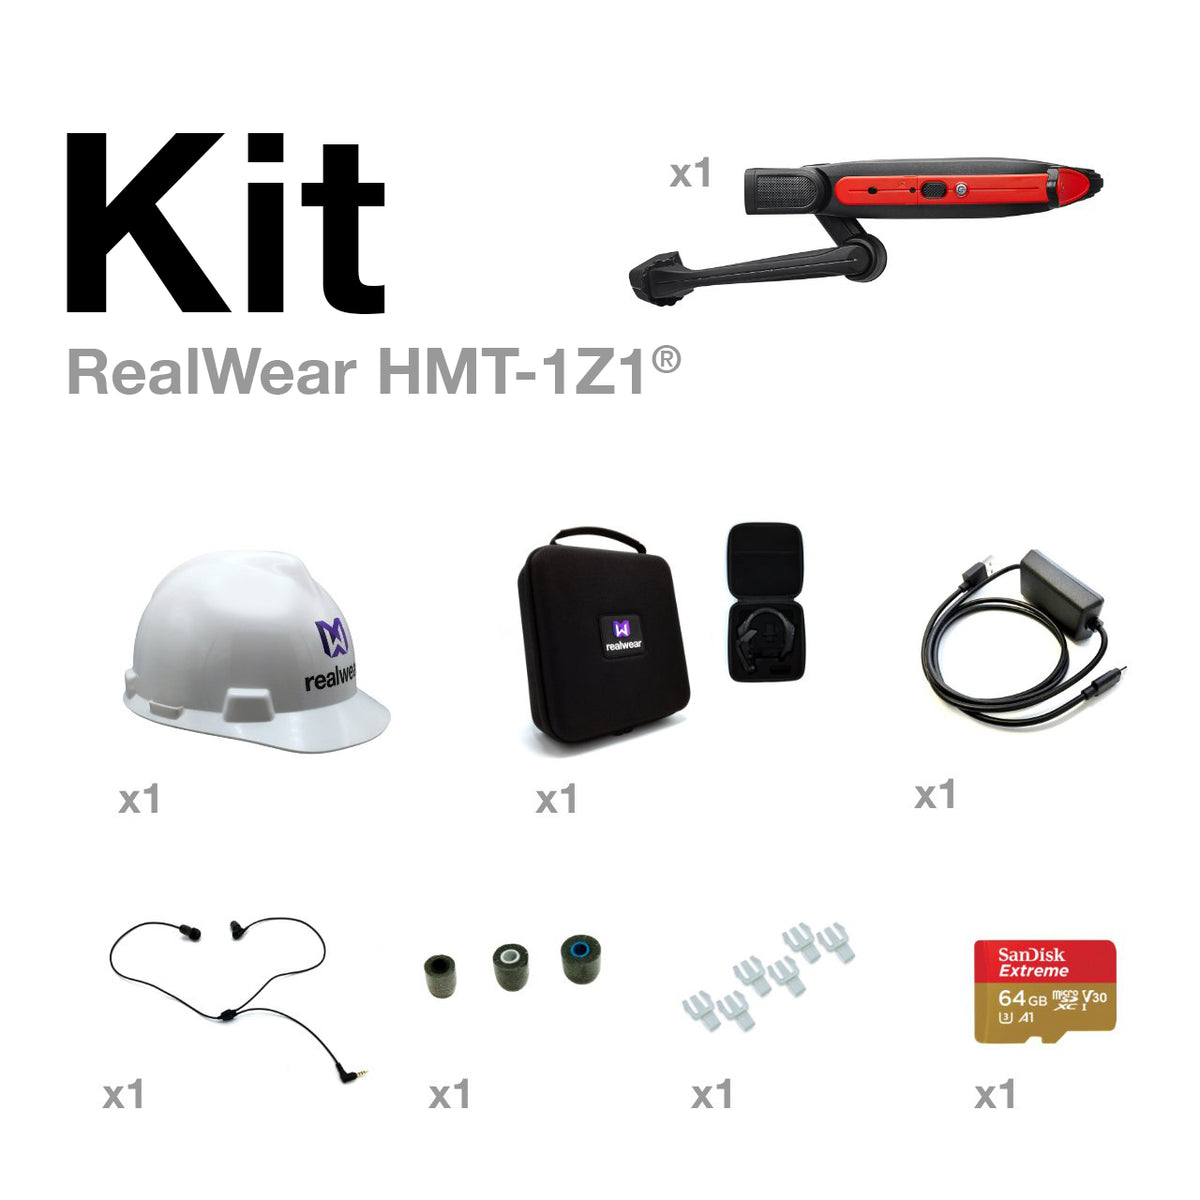 RealWear HMT-1Z1 ® x1 Validation Kit